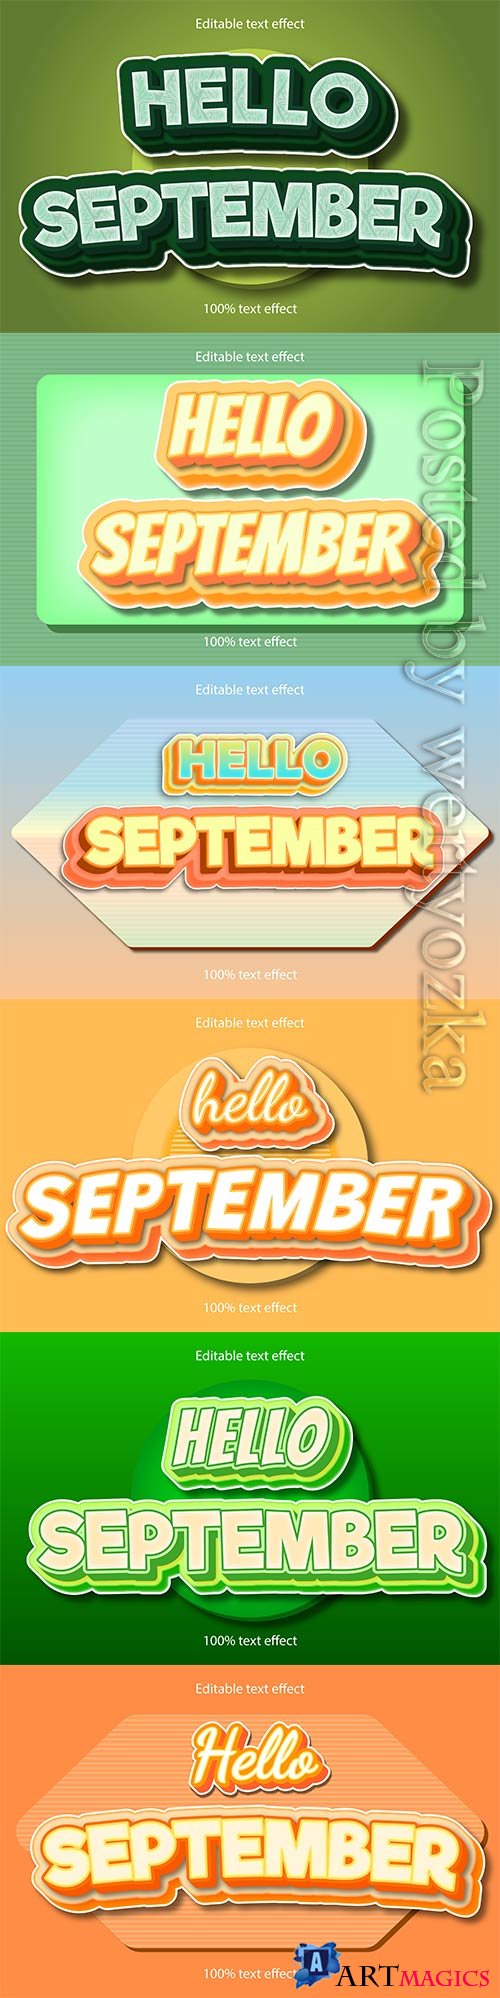 Hello september editable text effect vol 7